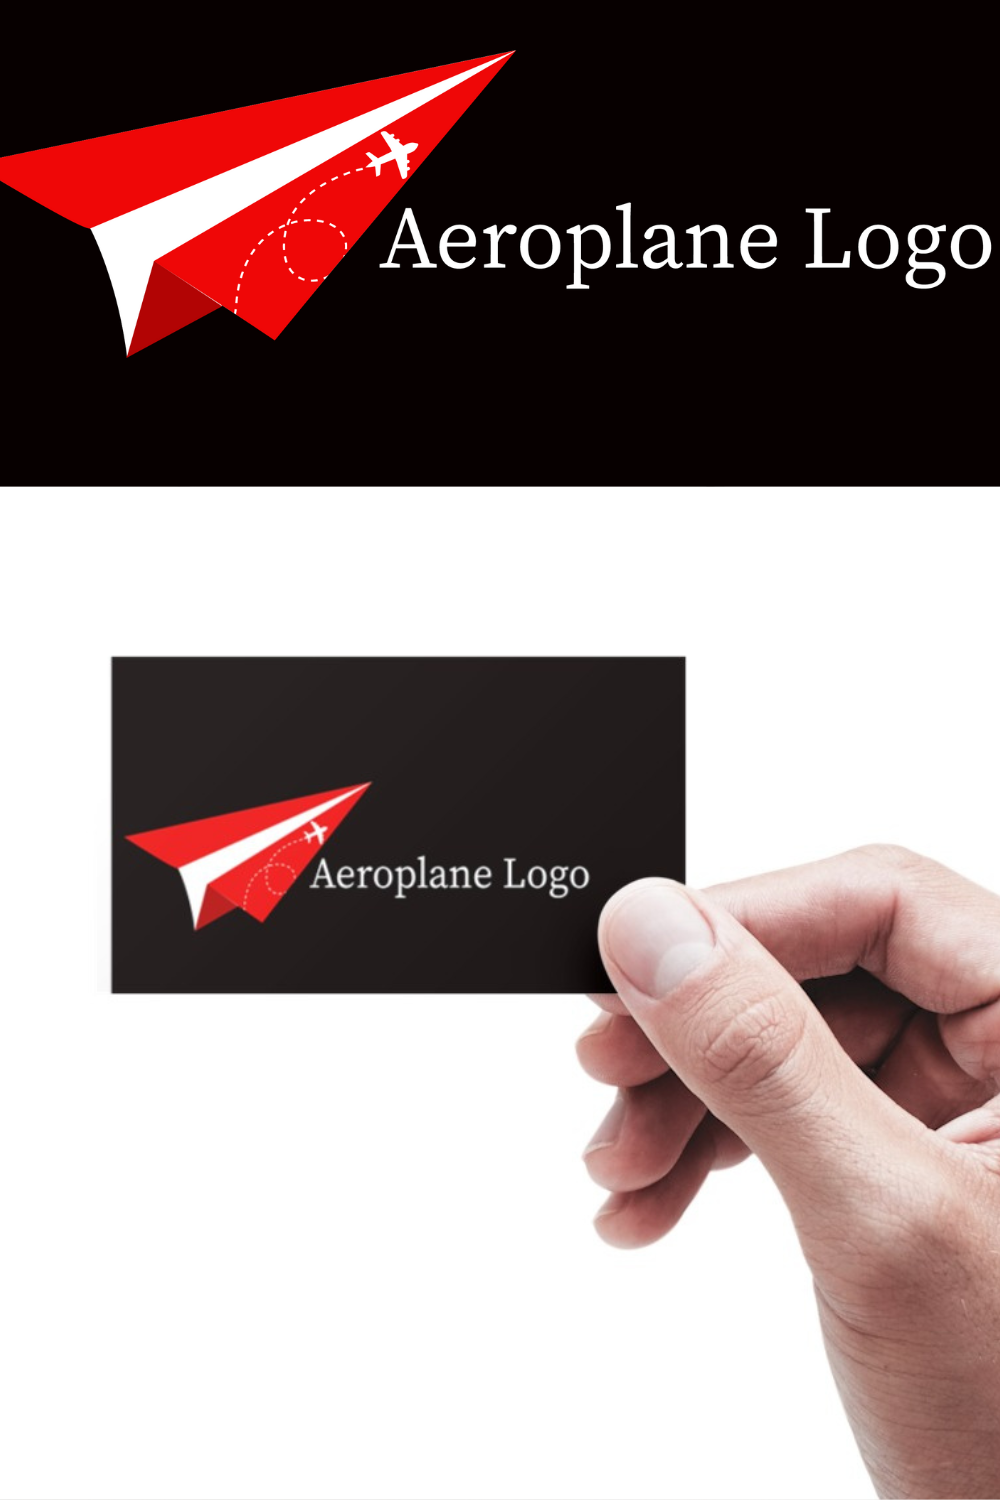 Aeroplan logo , fly logo travel logo pinterest preview image.